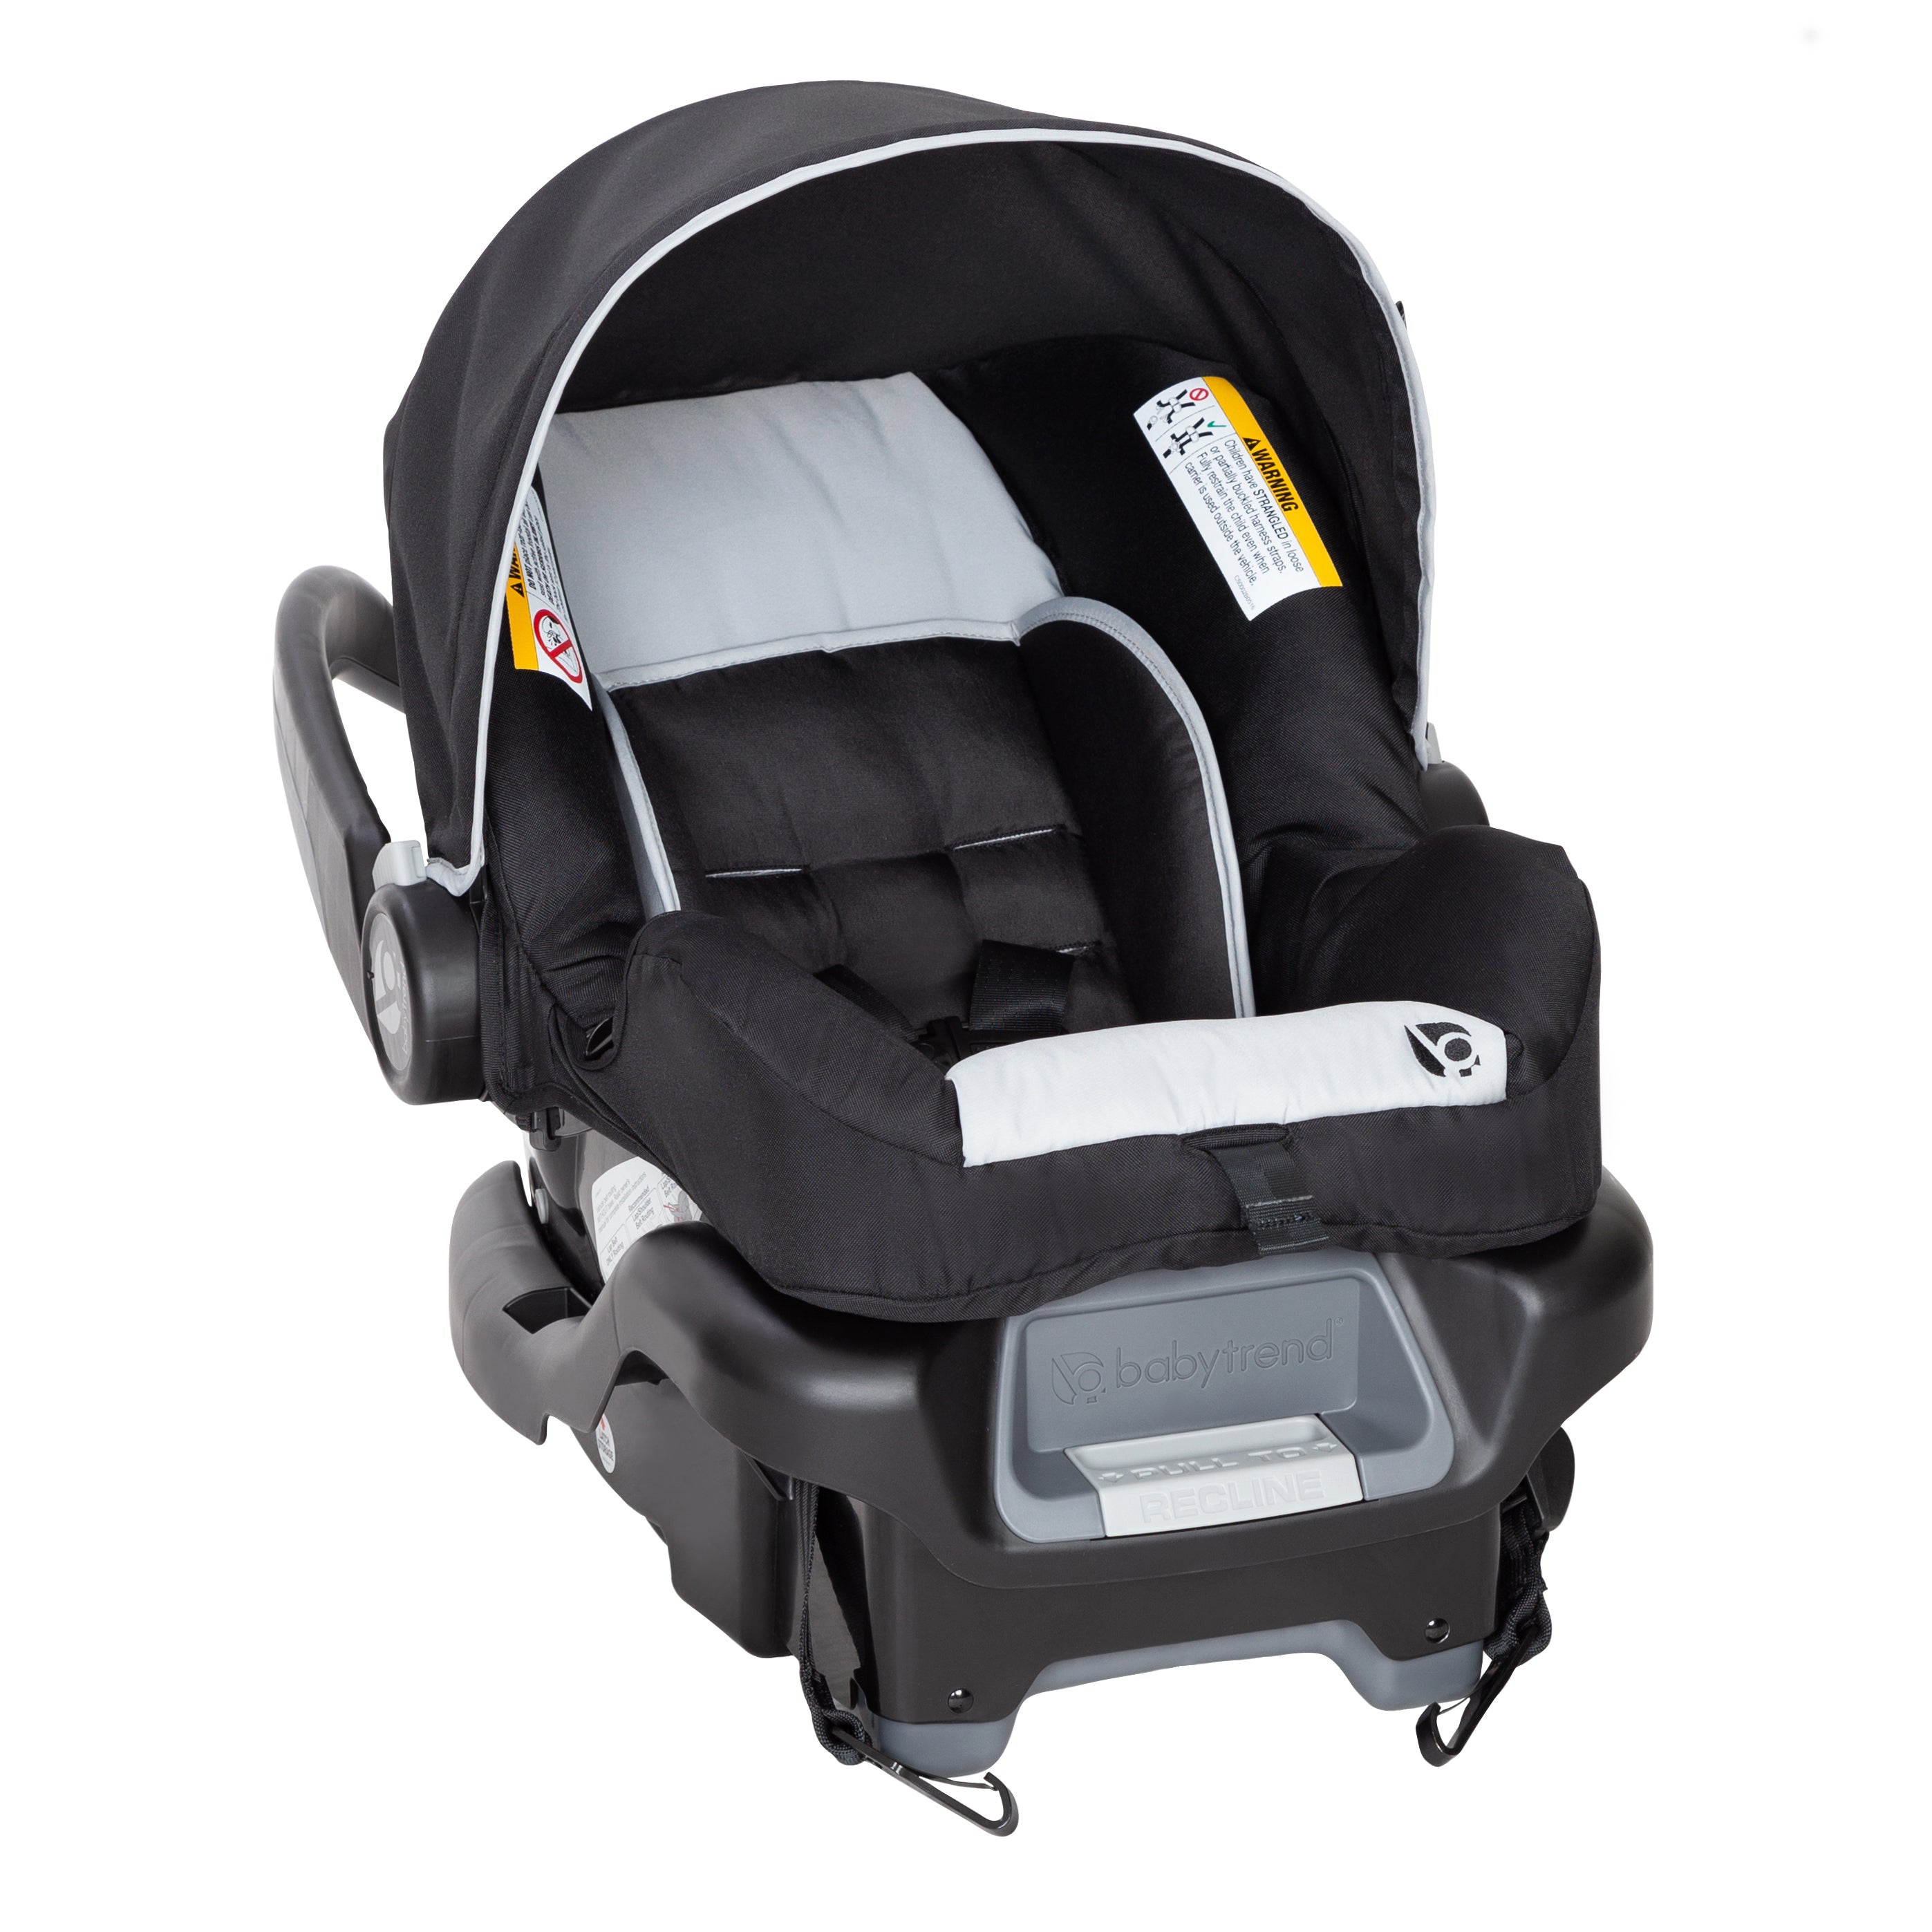 Baby Products Online - Child Safety Strap Locks 12 Pack Child